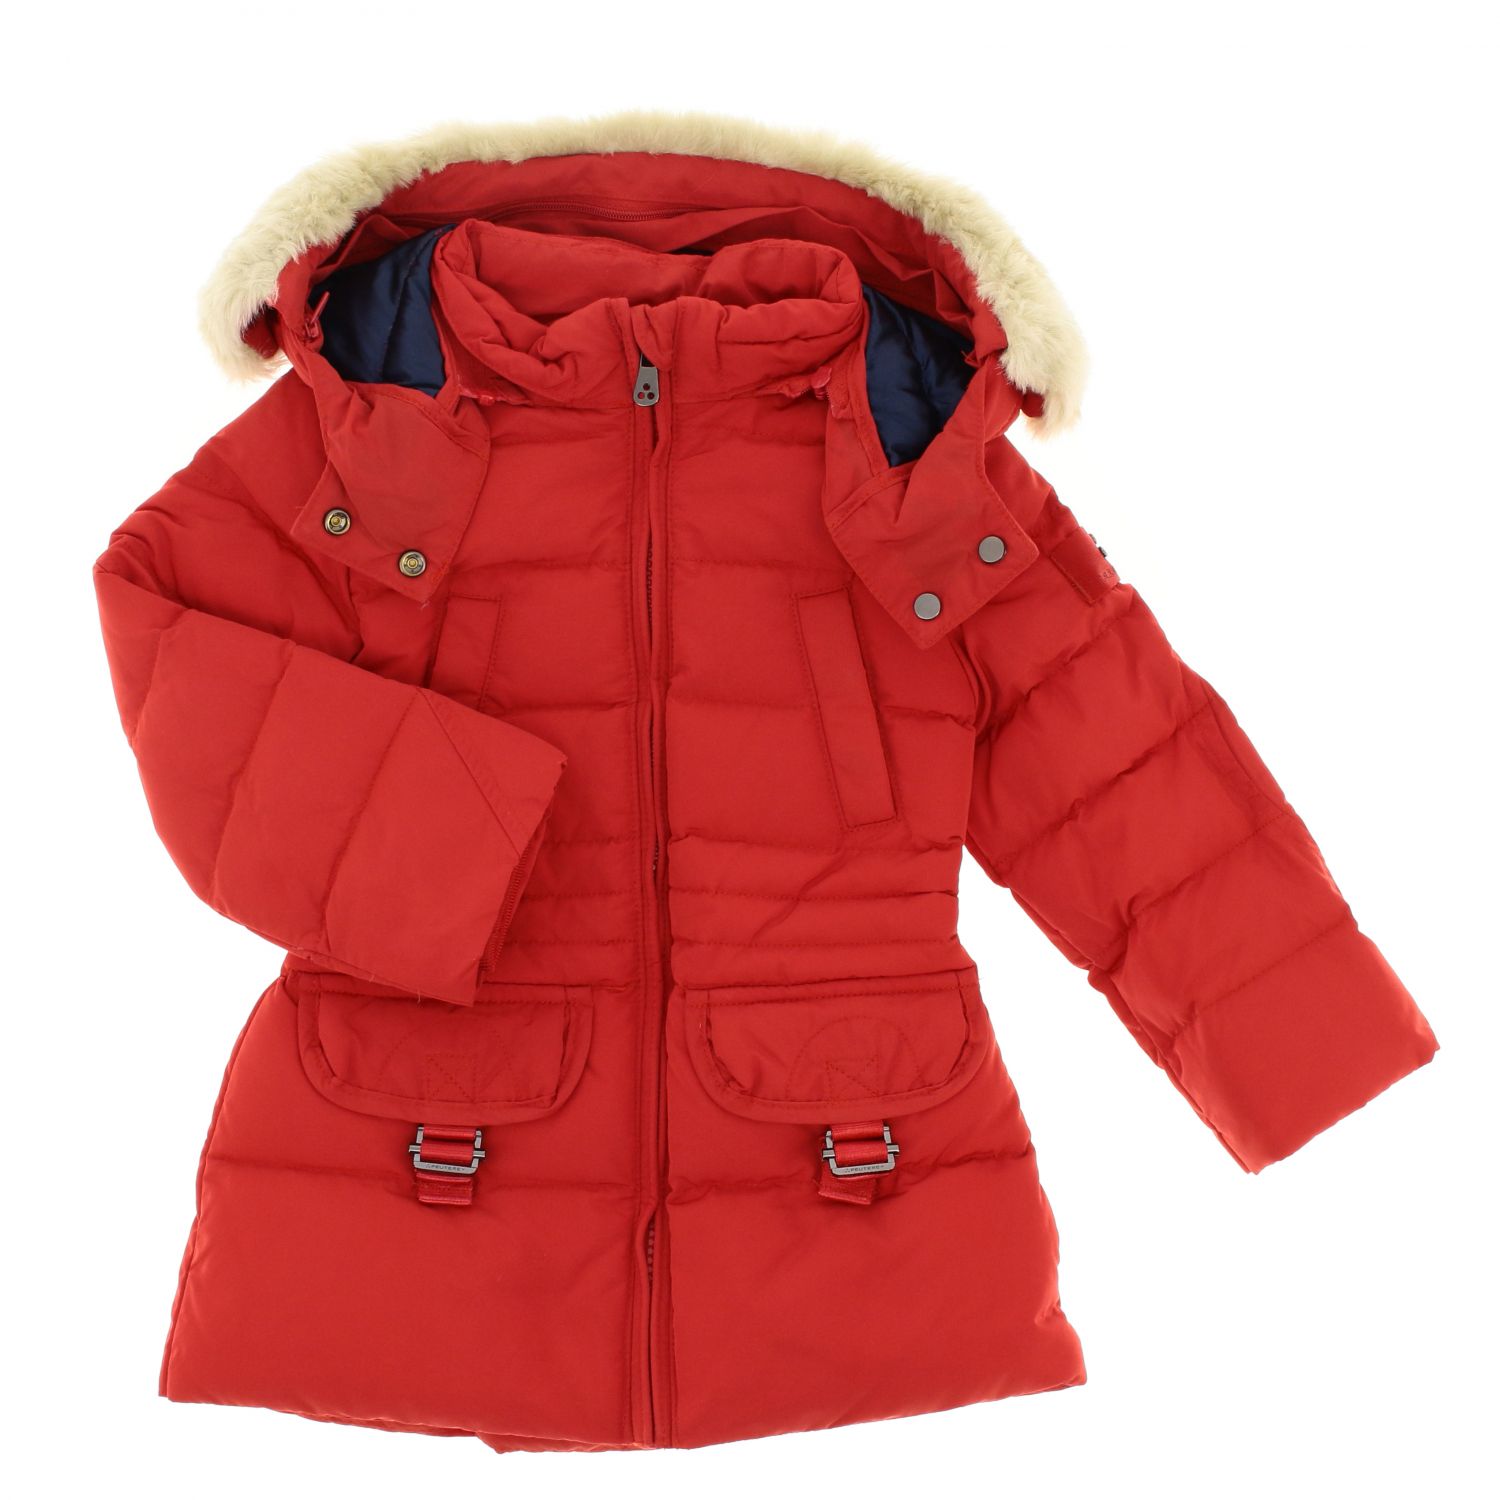 Peuterey Outlet: jacket for girls - Red | Peuterey jacket PTG0840 ...